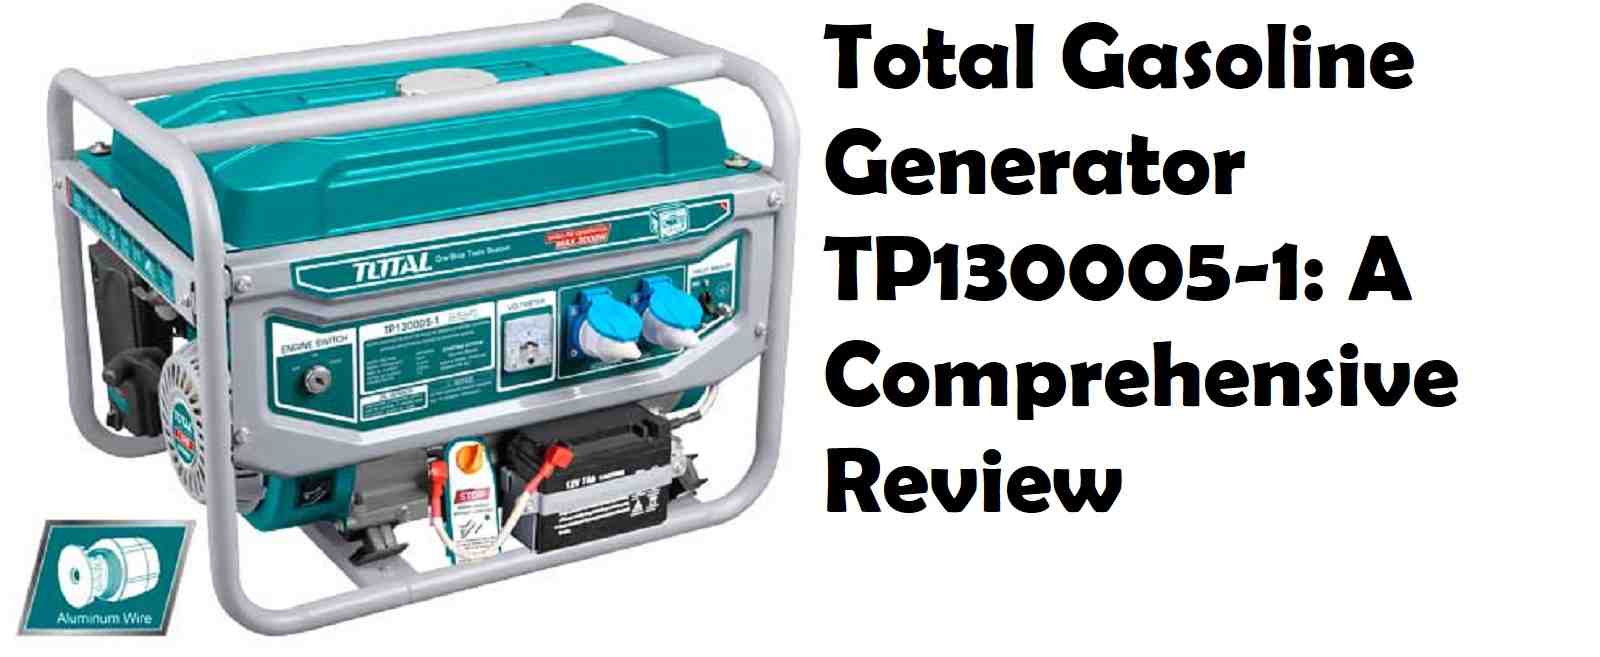 Gasoline Generator TP130005-1 Total